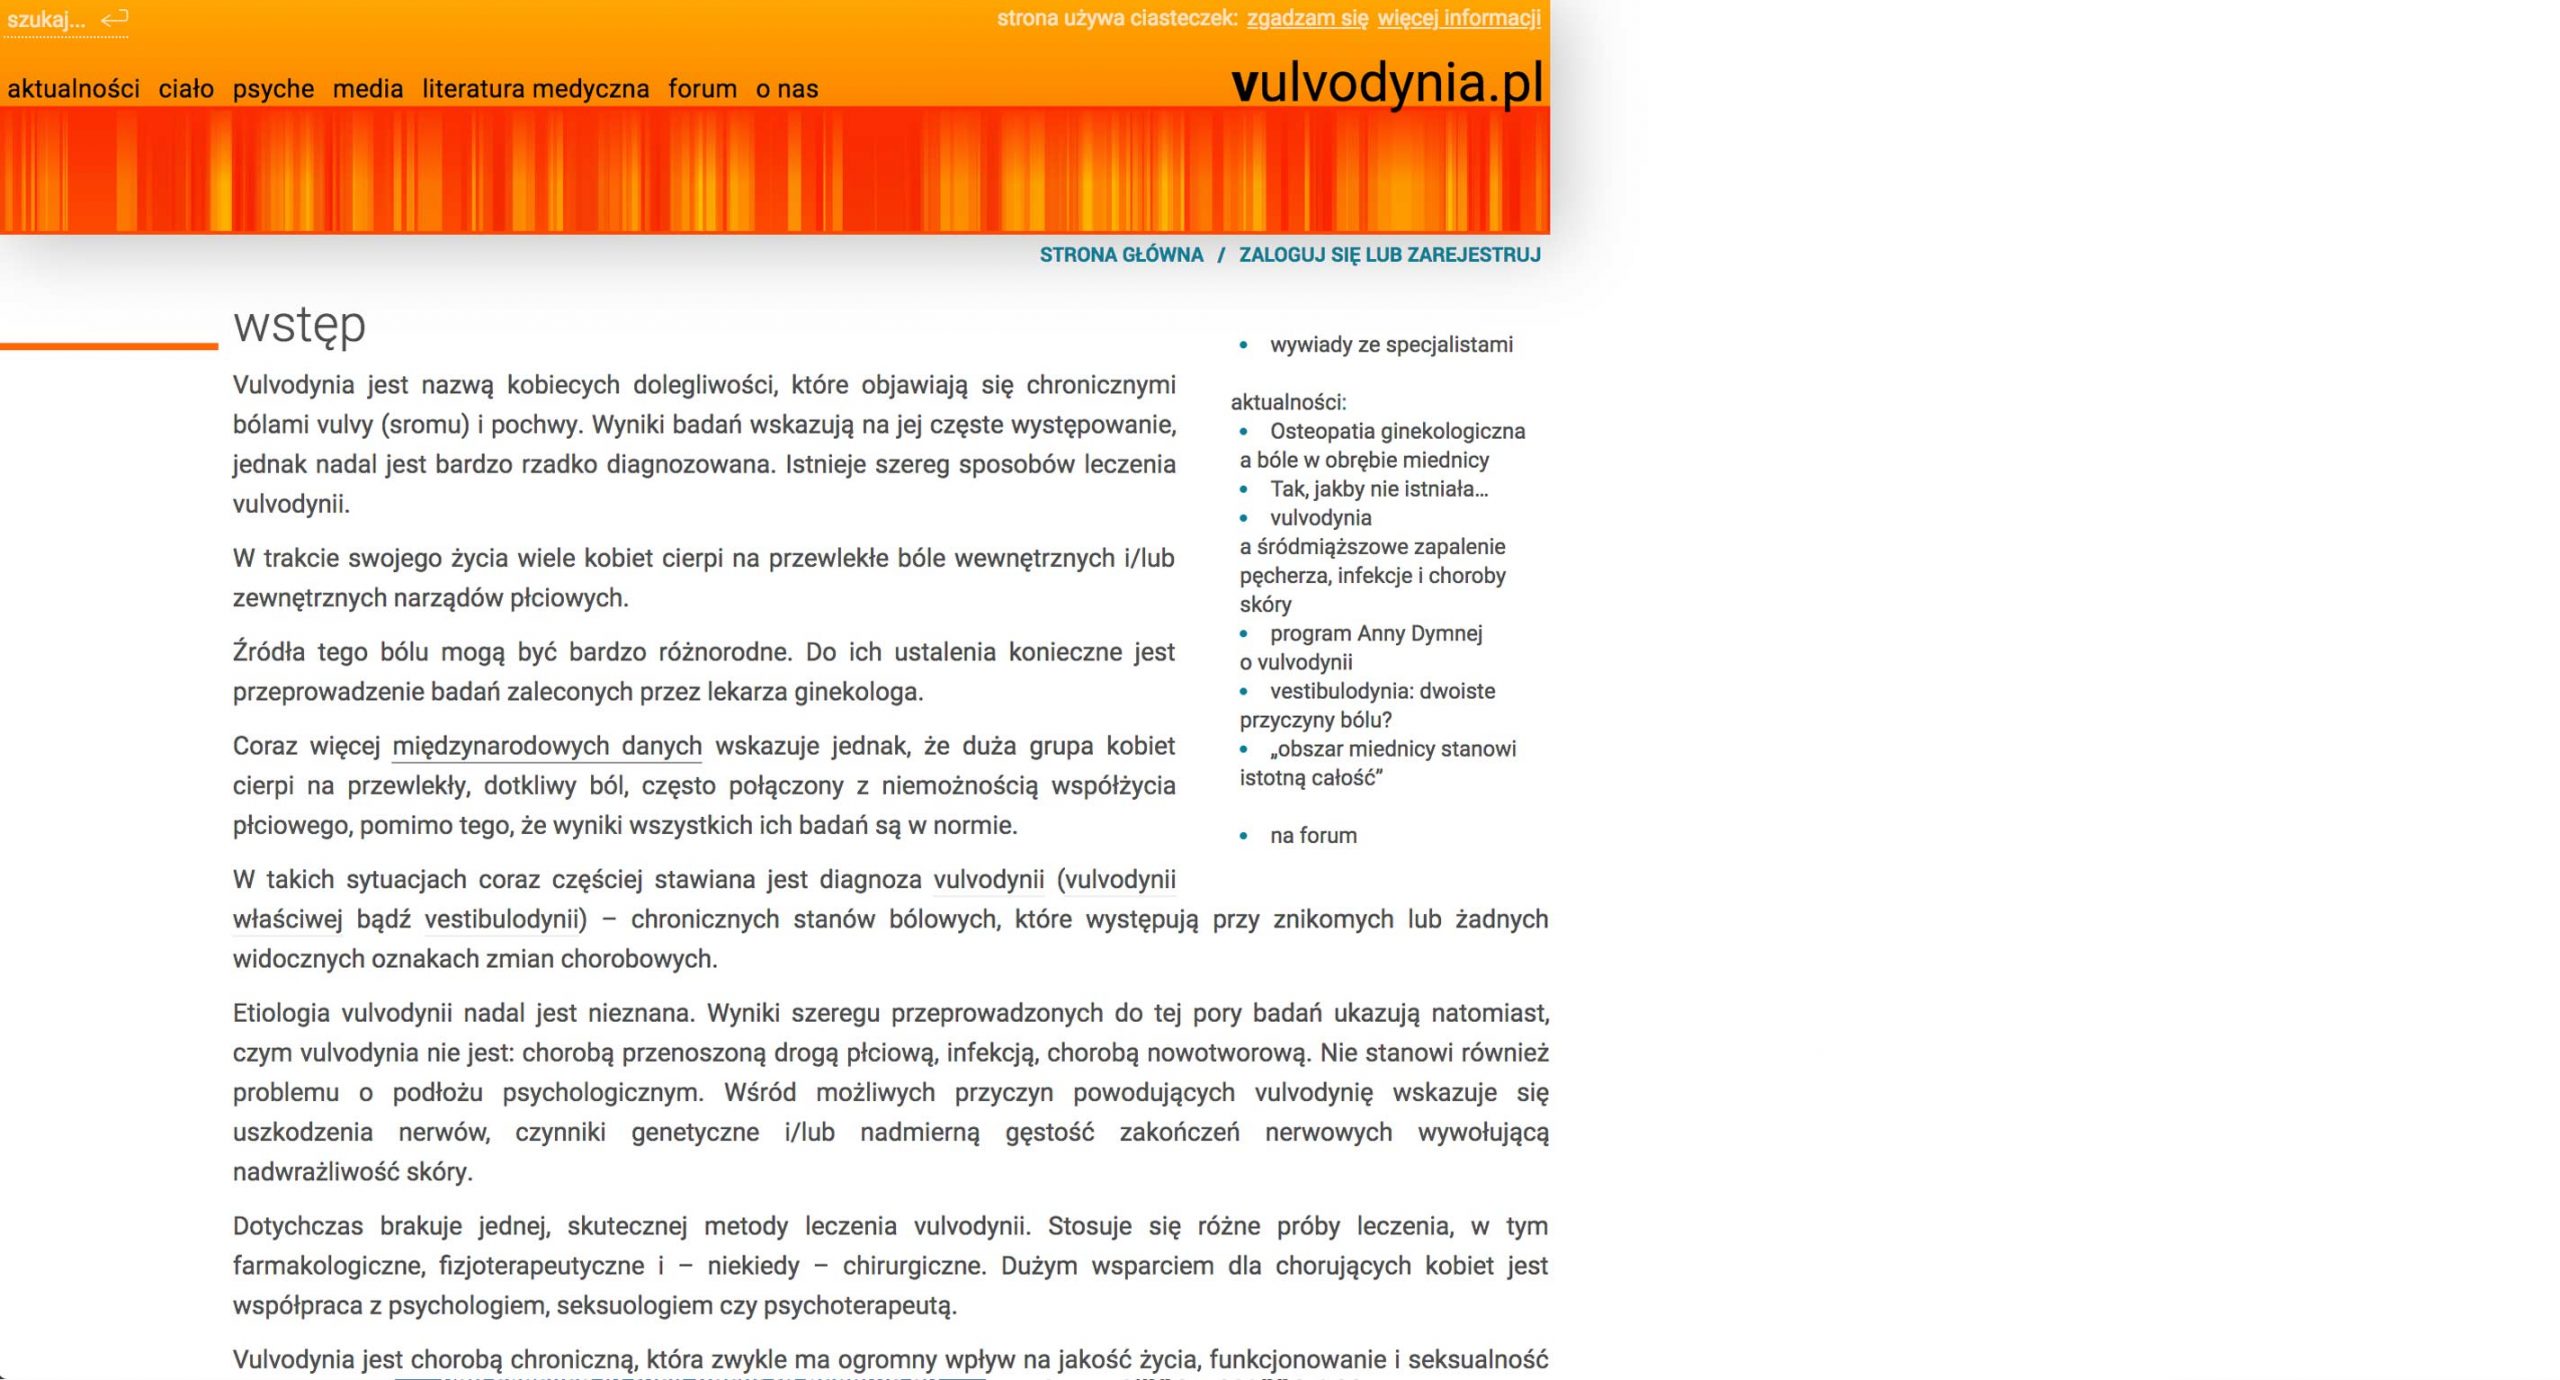 vulvodynia.pl - Home Page